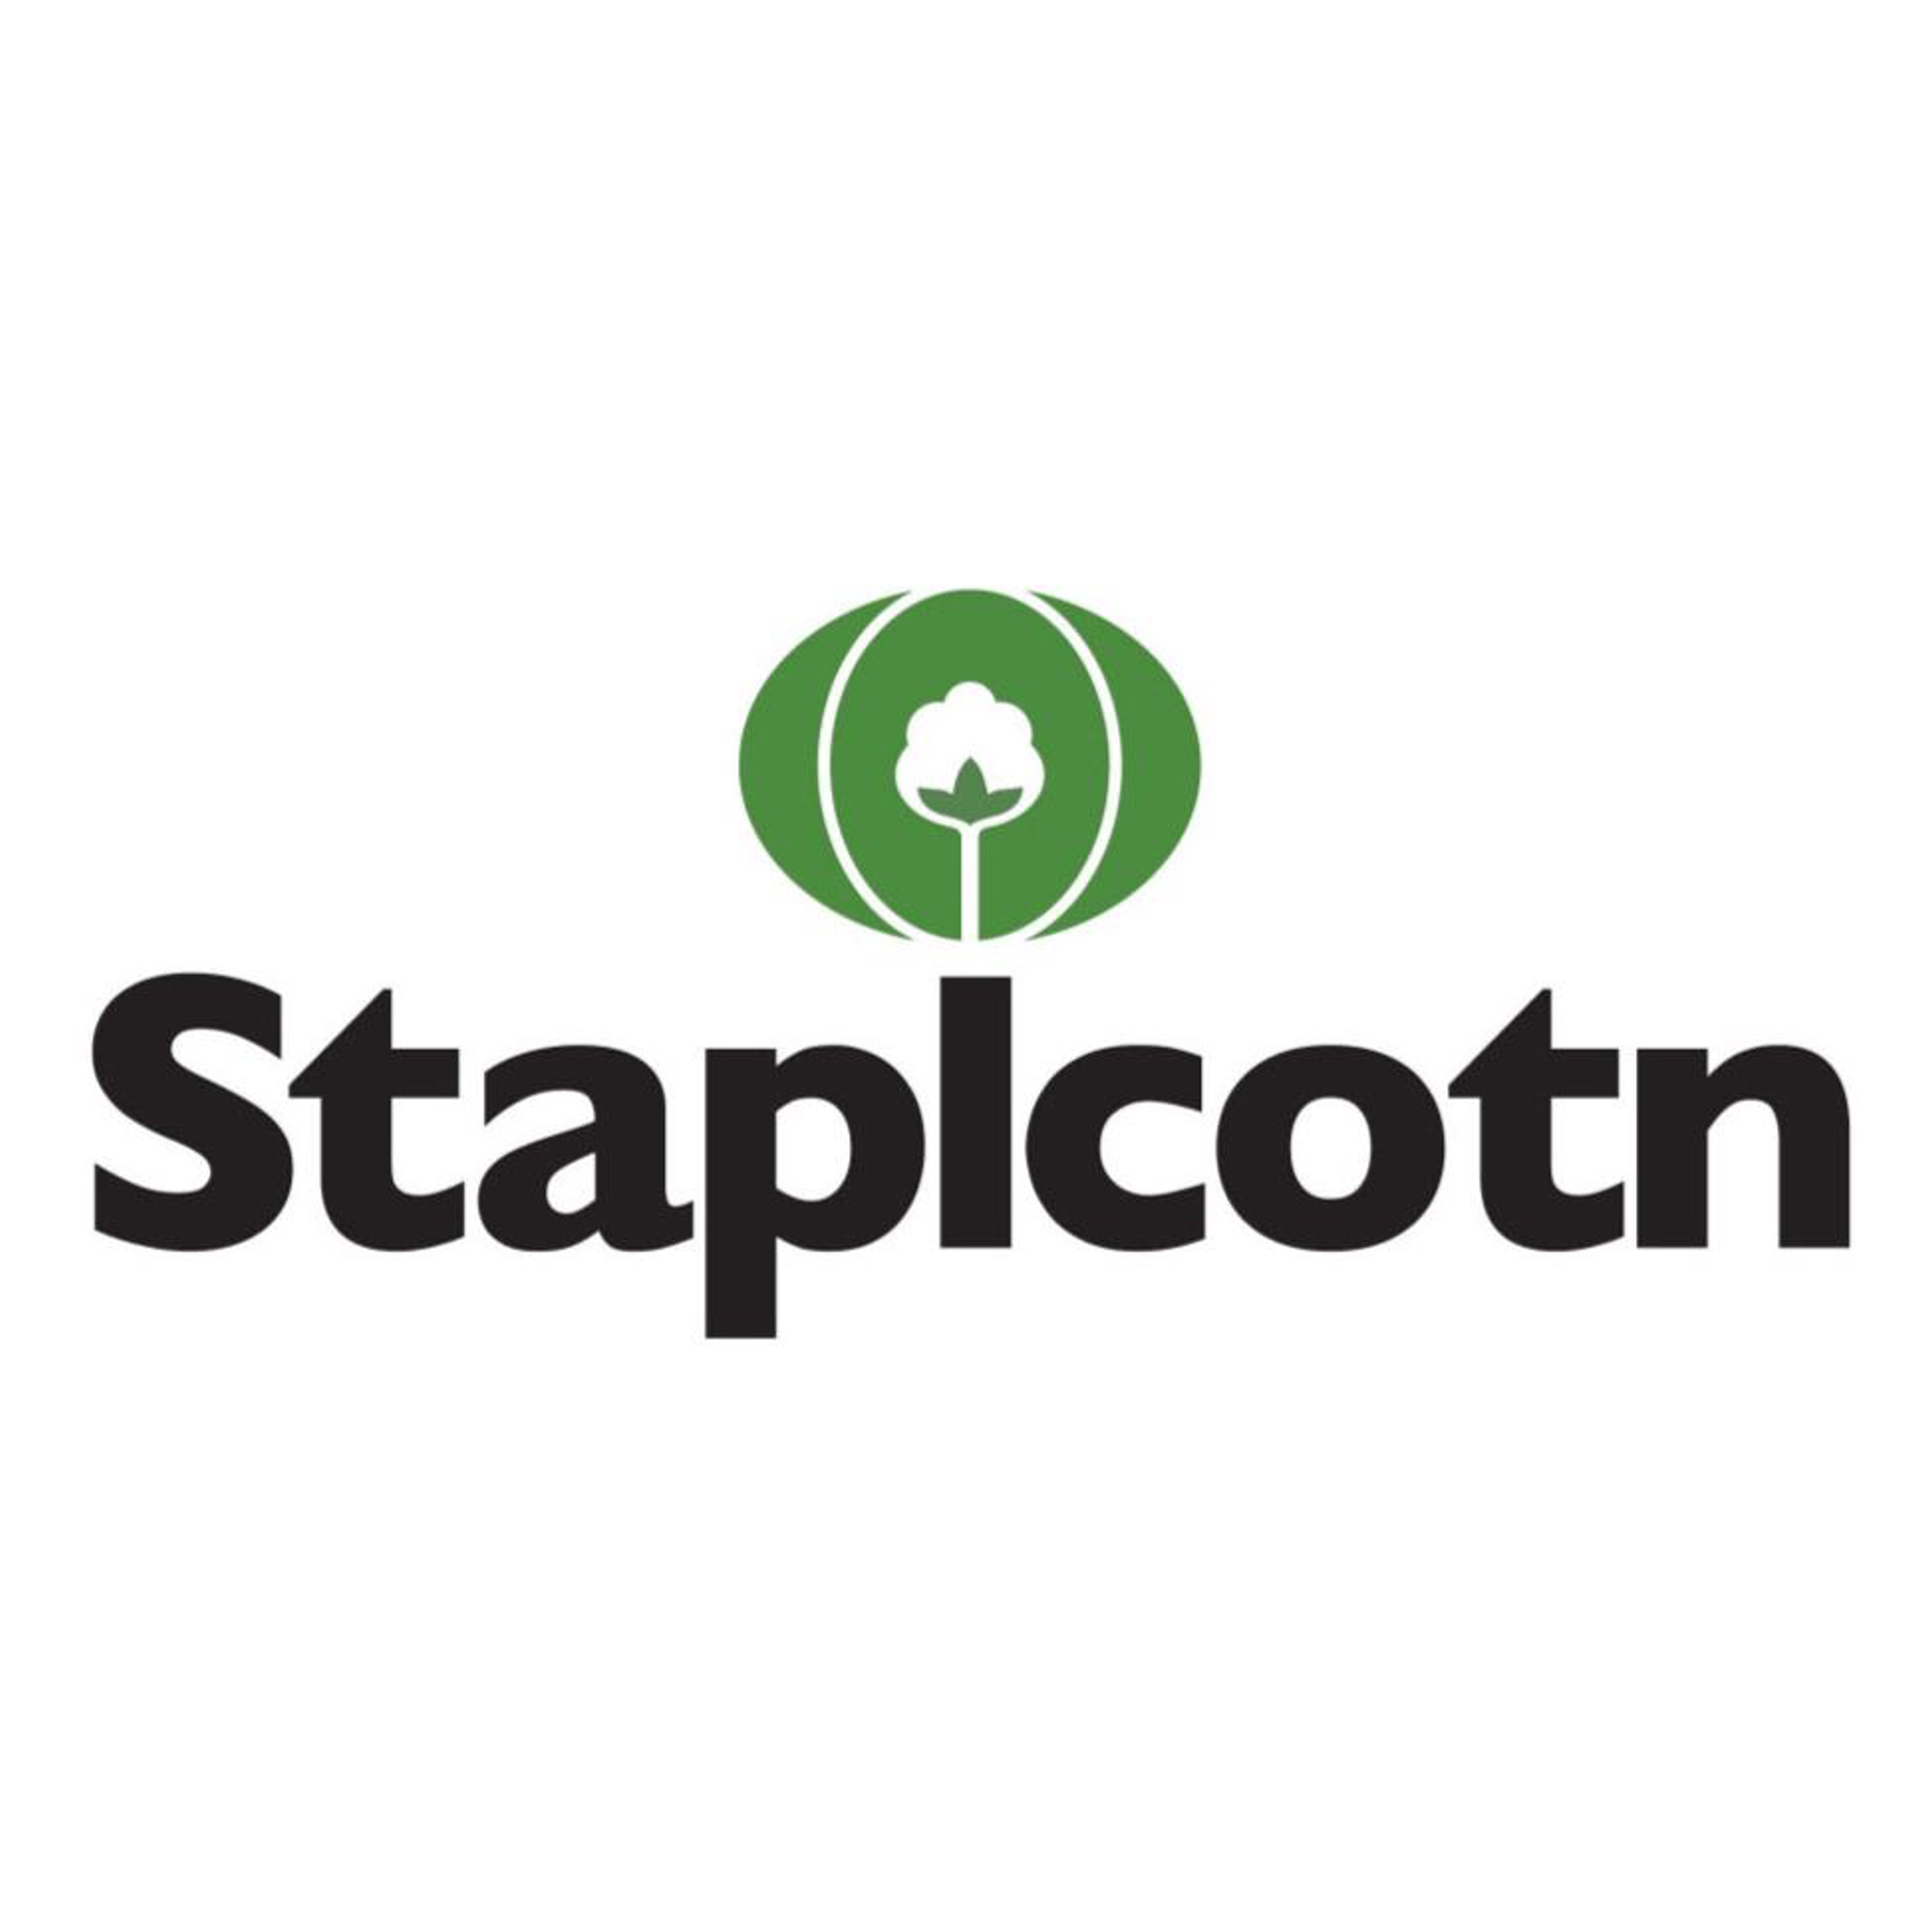 Staplcotn logo